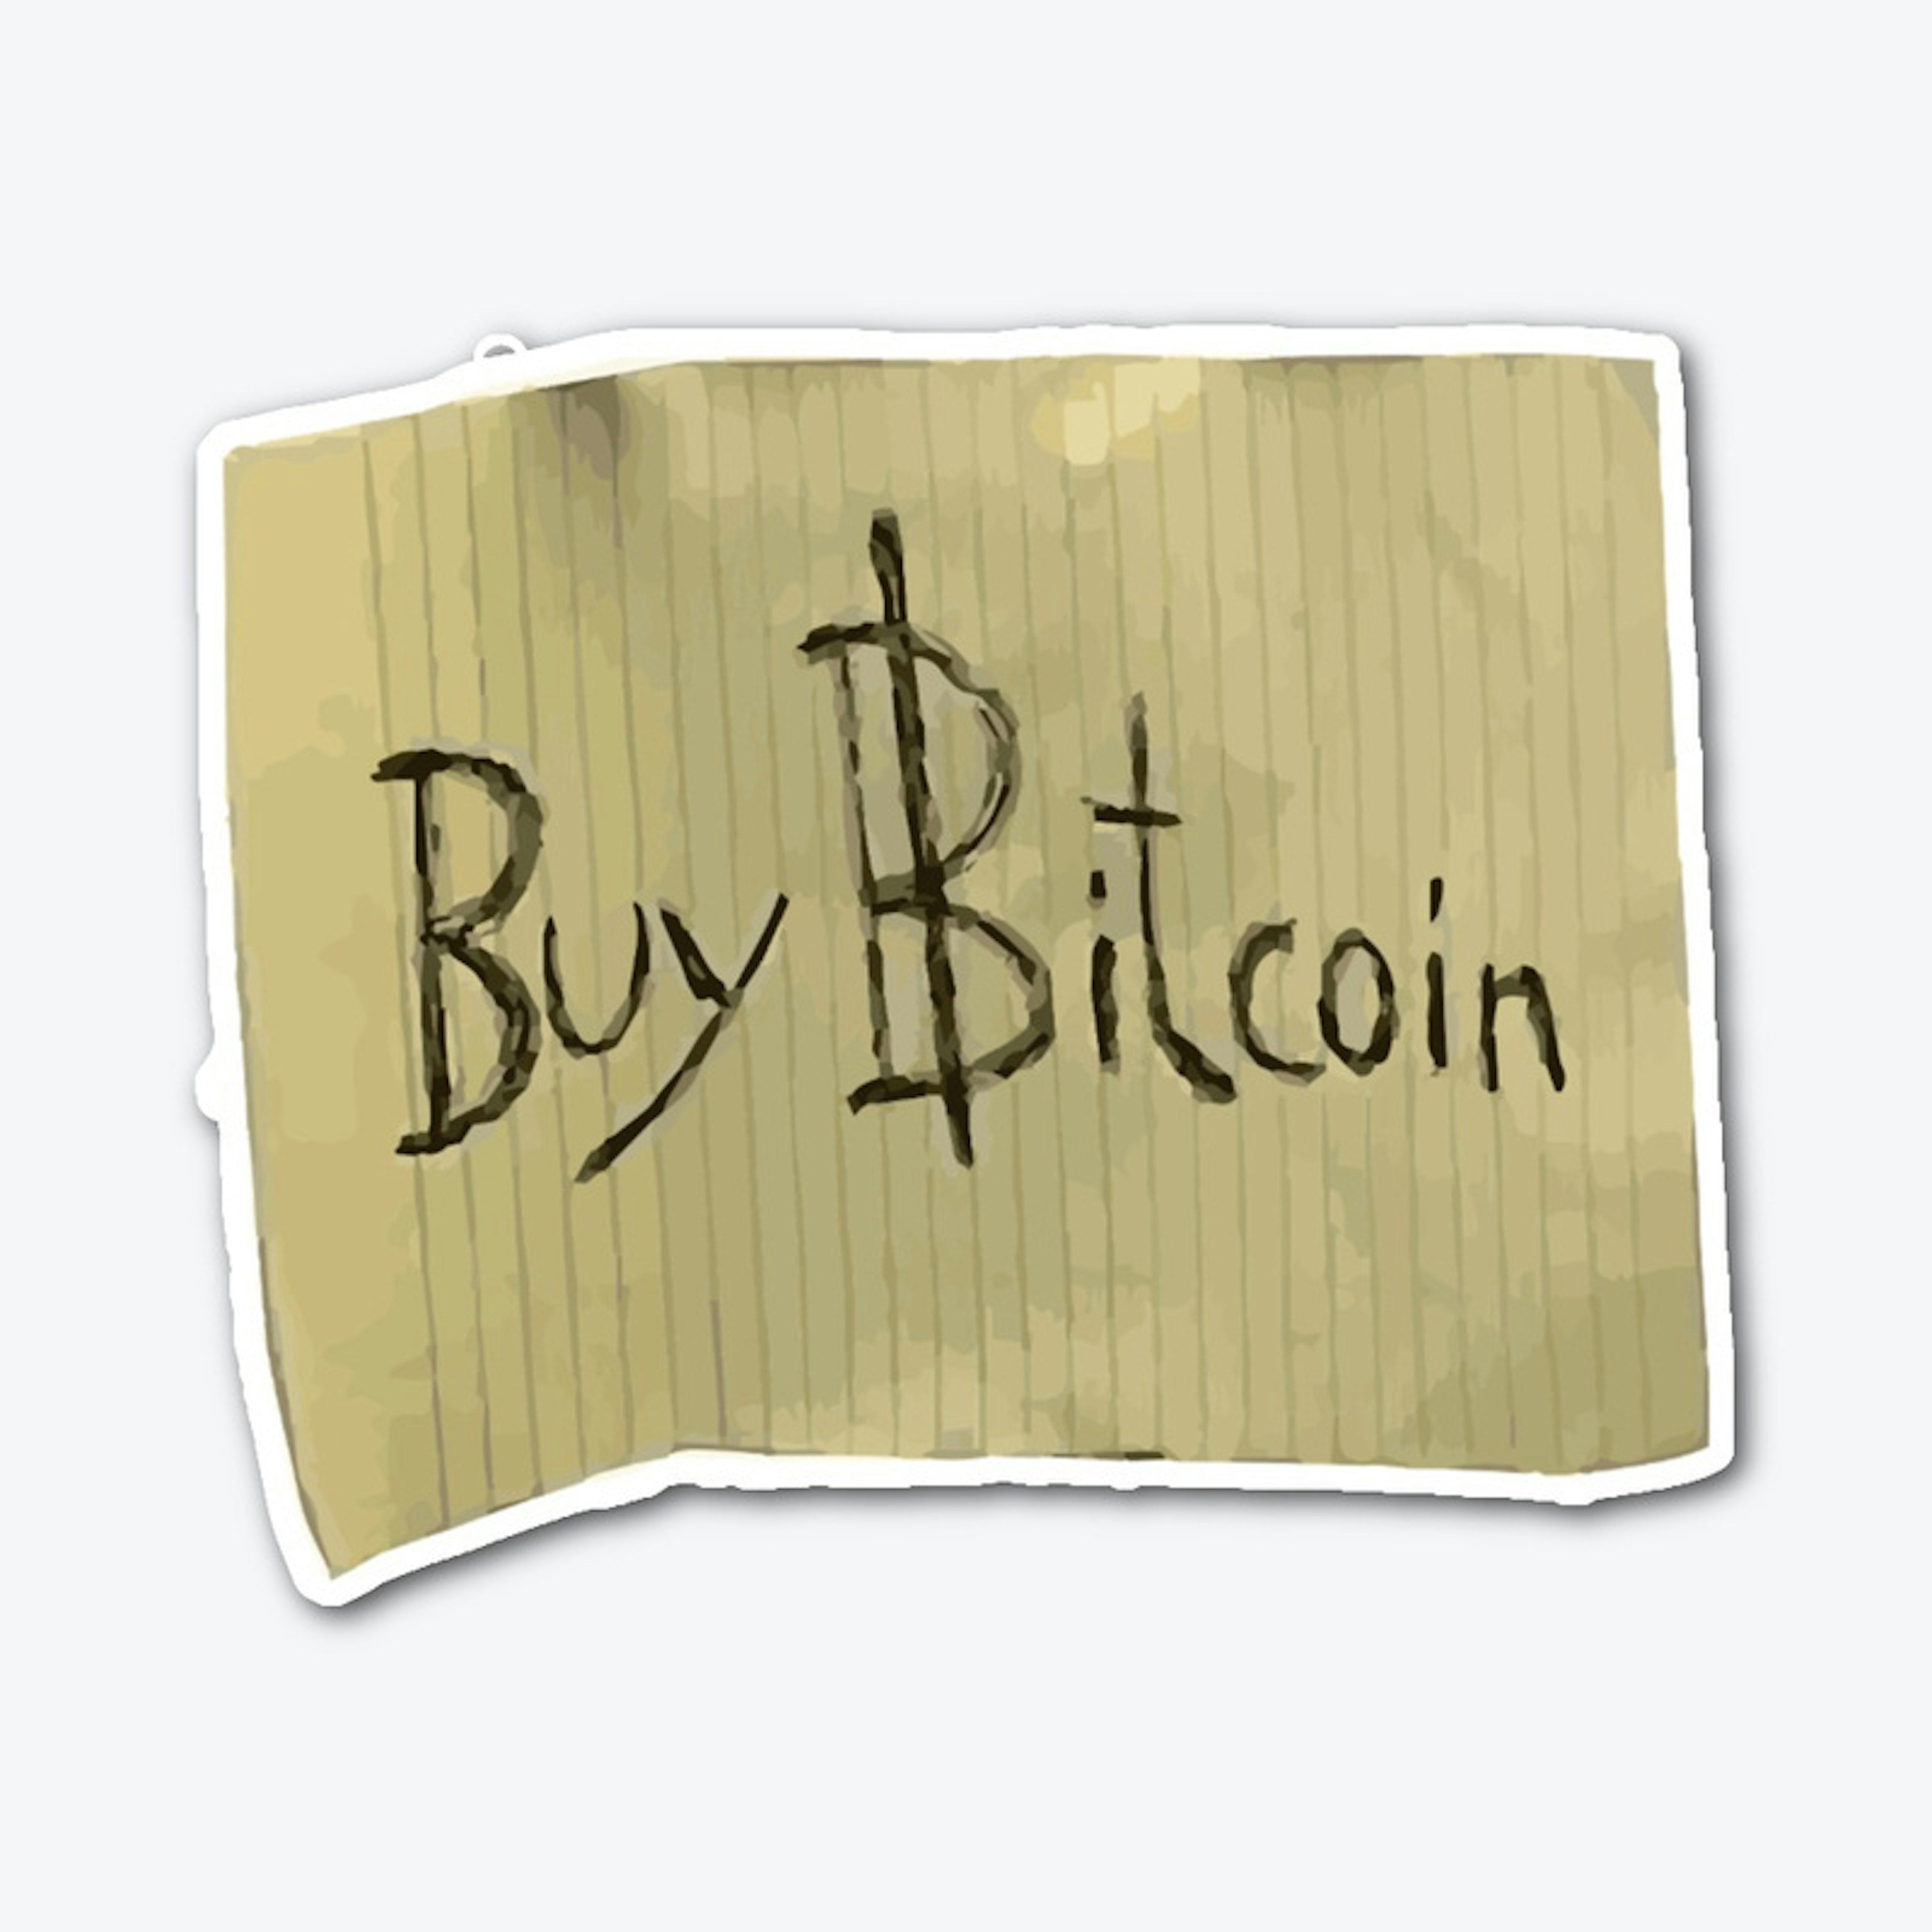 Buy Bitcoin Sign